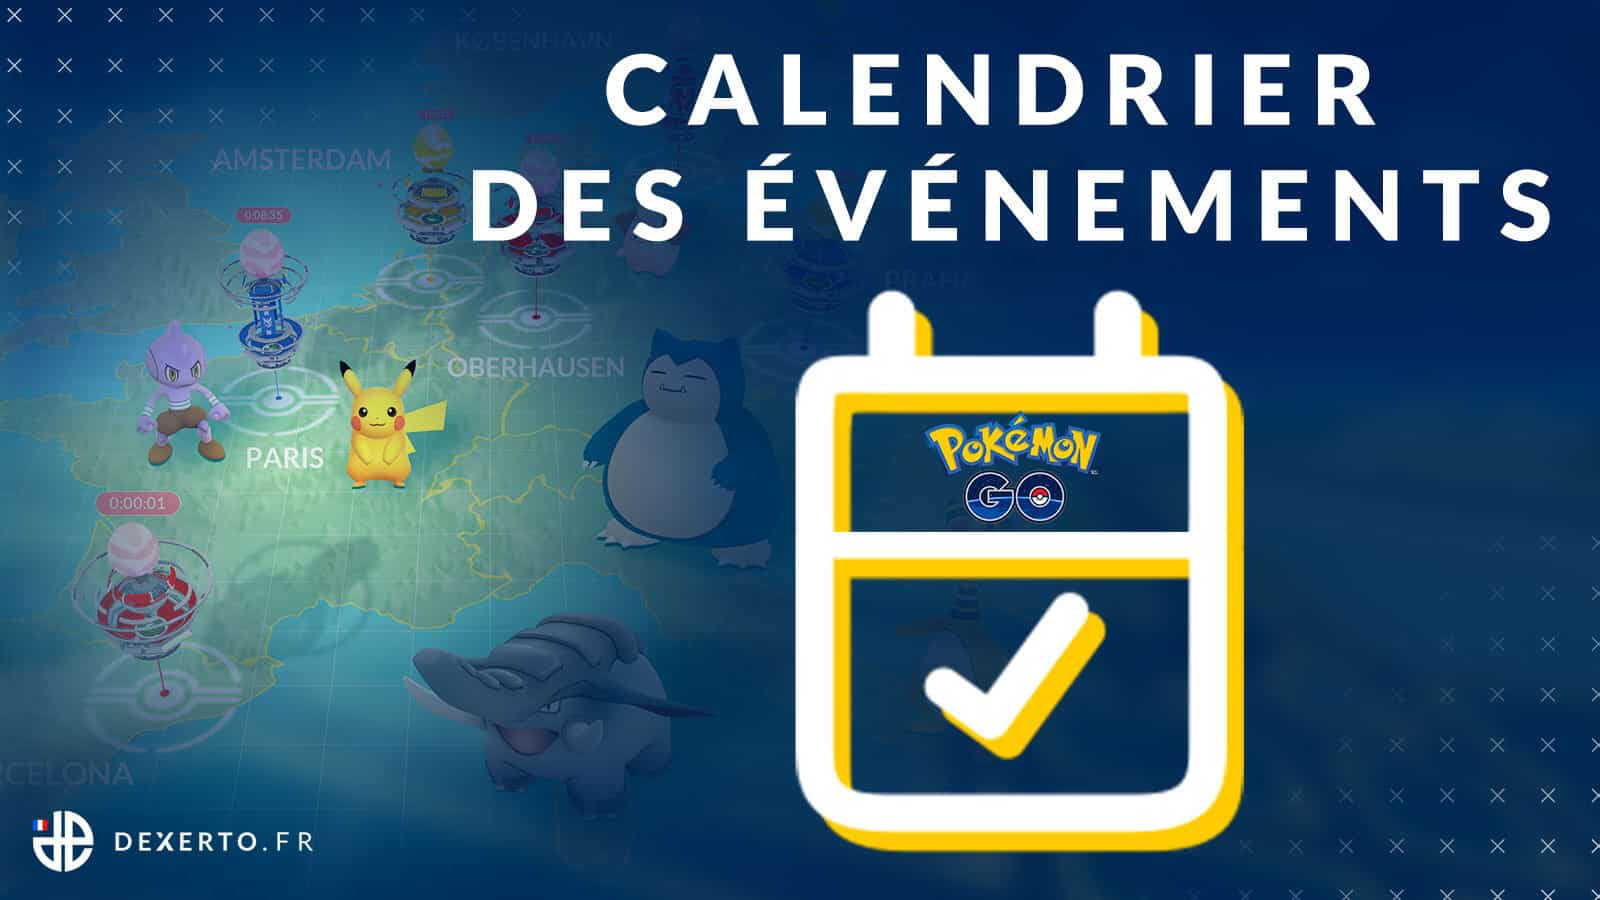 Pokémon Go calendrier événements